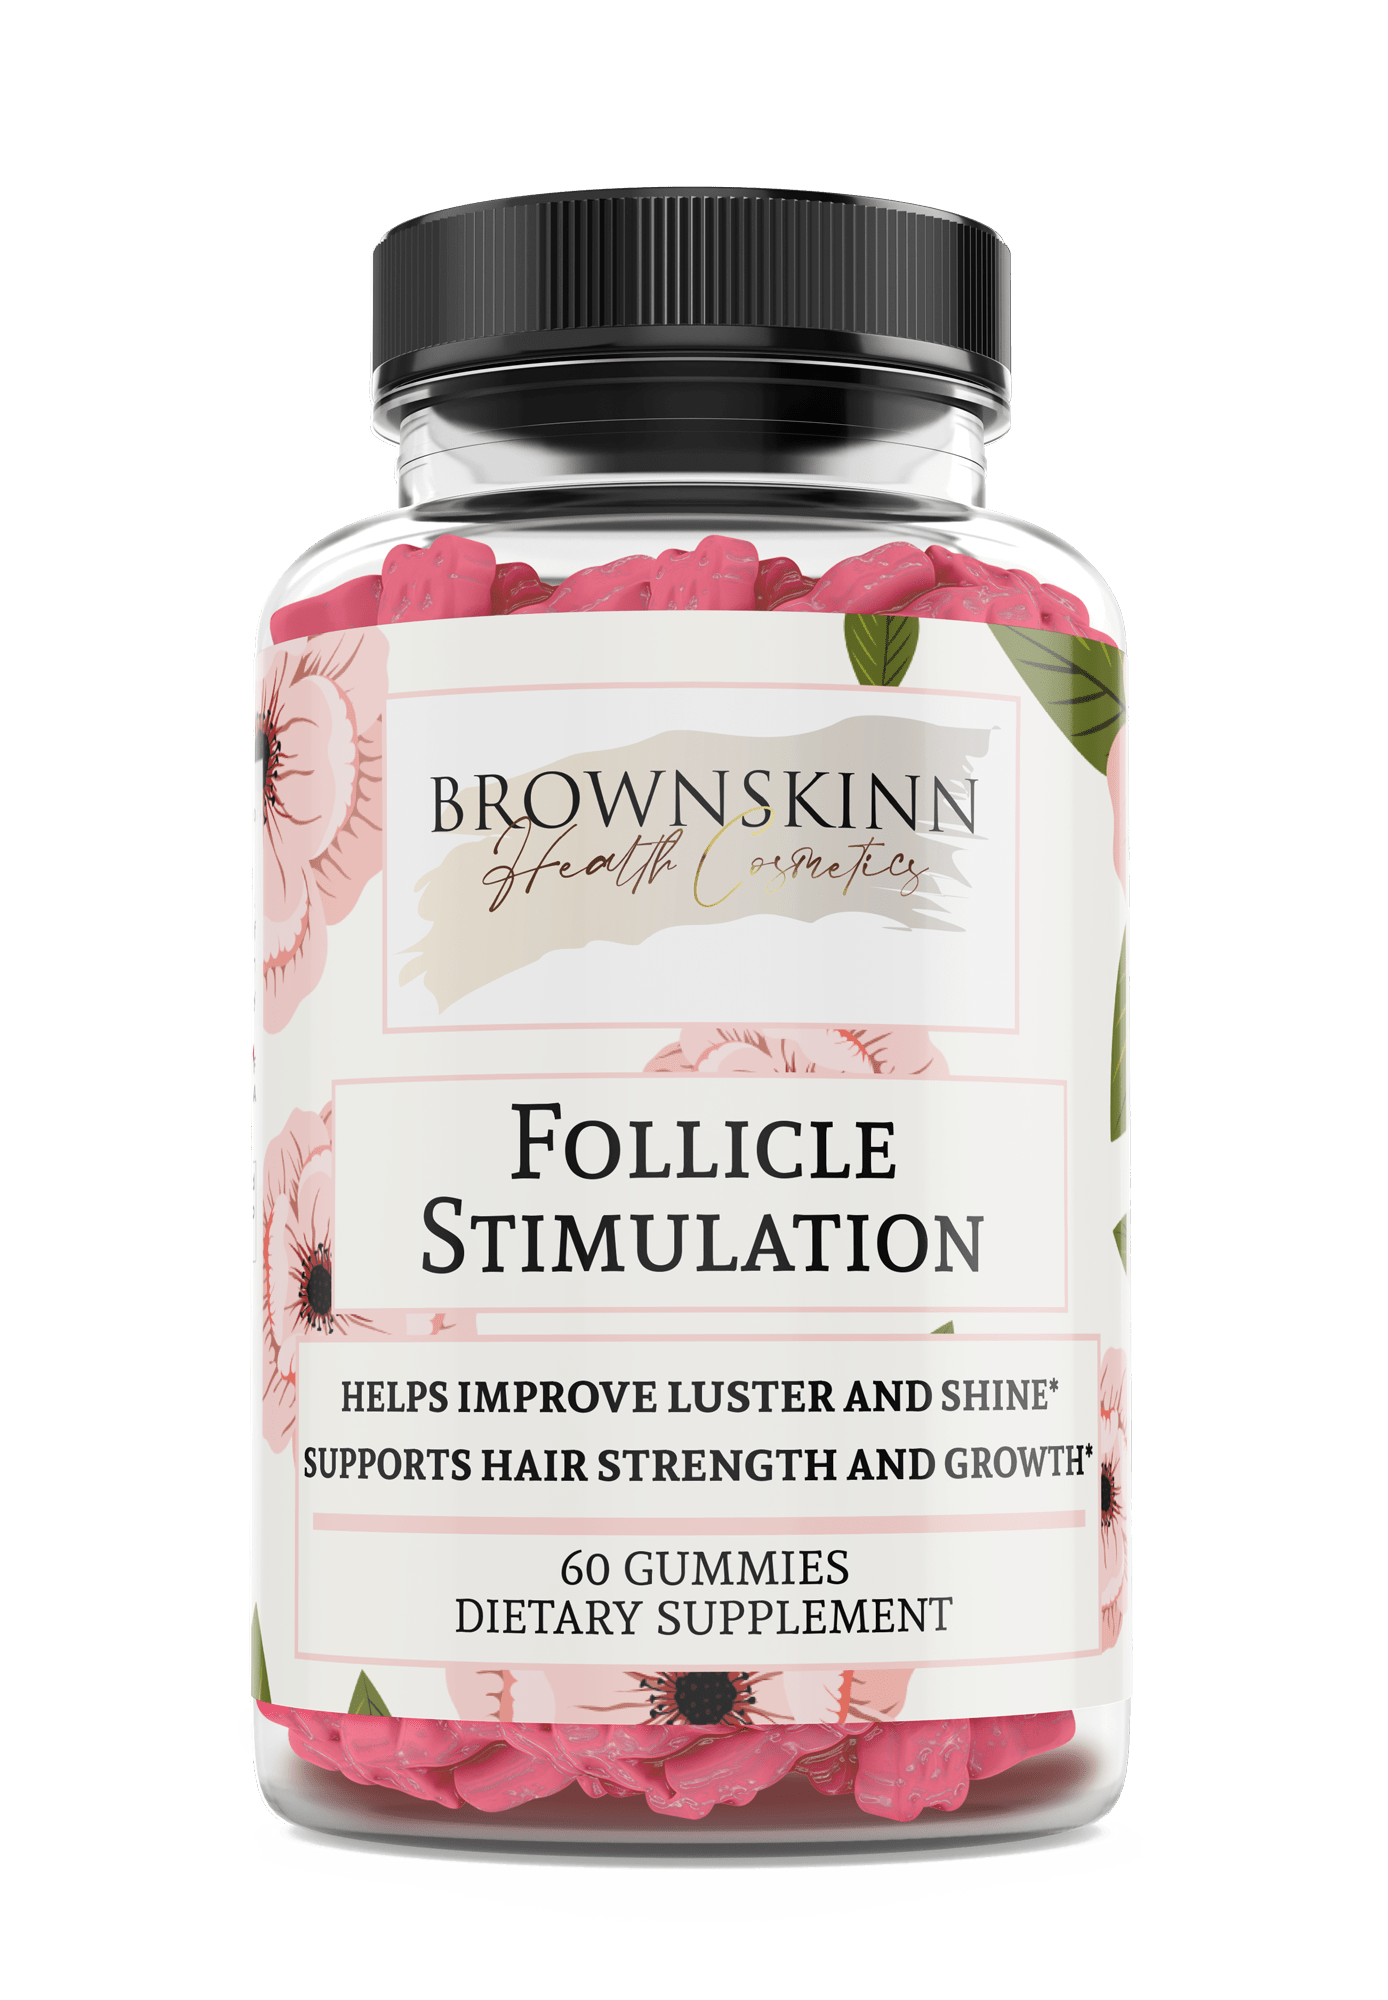 Brownskinn Follicle Stimulation